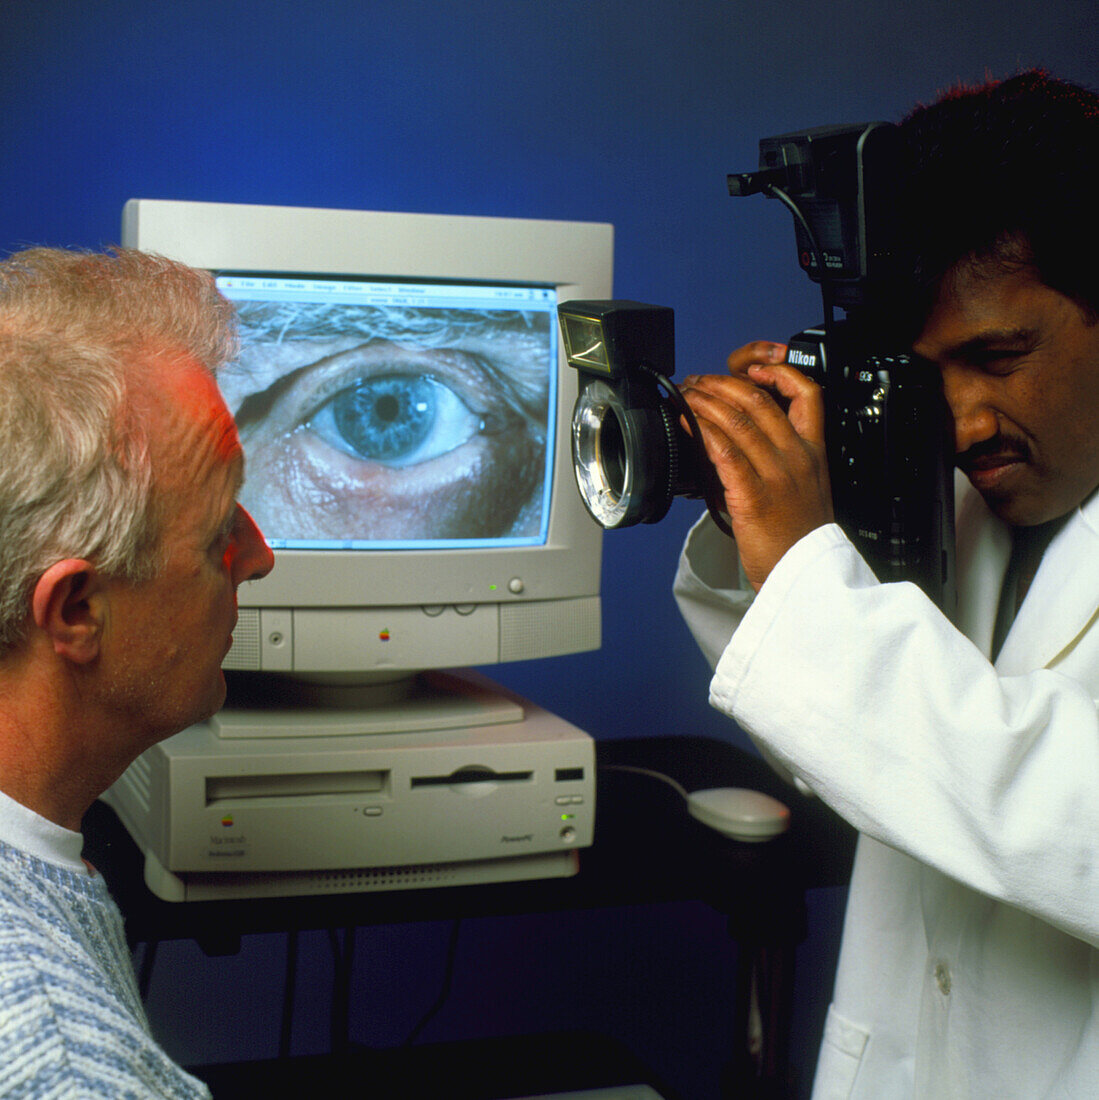 Doctor photographs man's eye for digital records